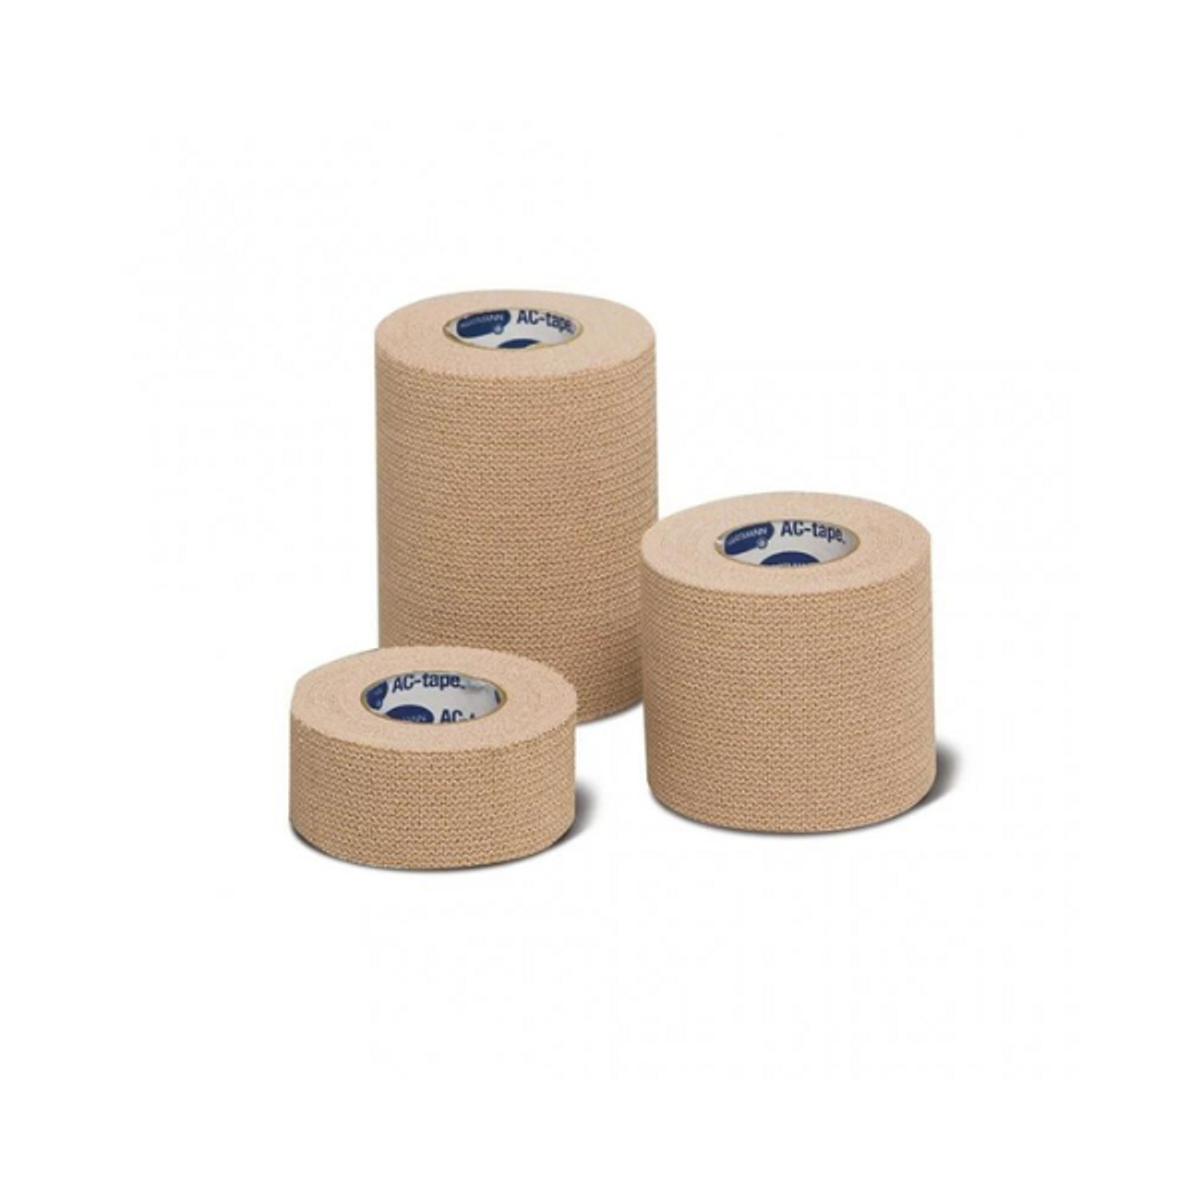 Hartmann USA AC Tape Lf Elastic Adhesive Bandages